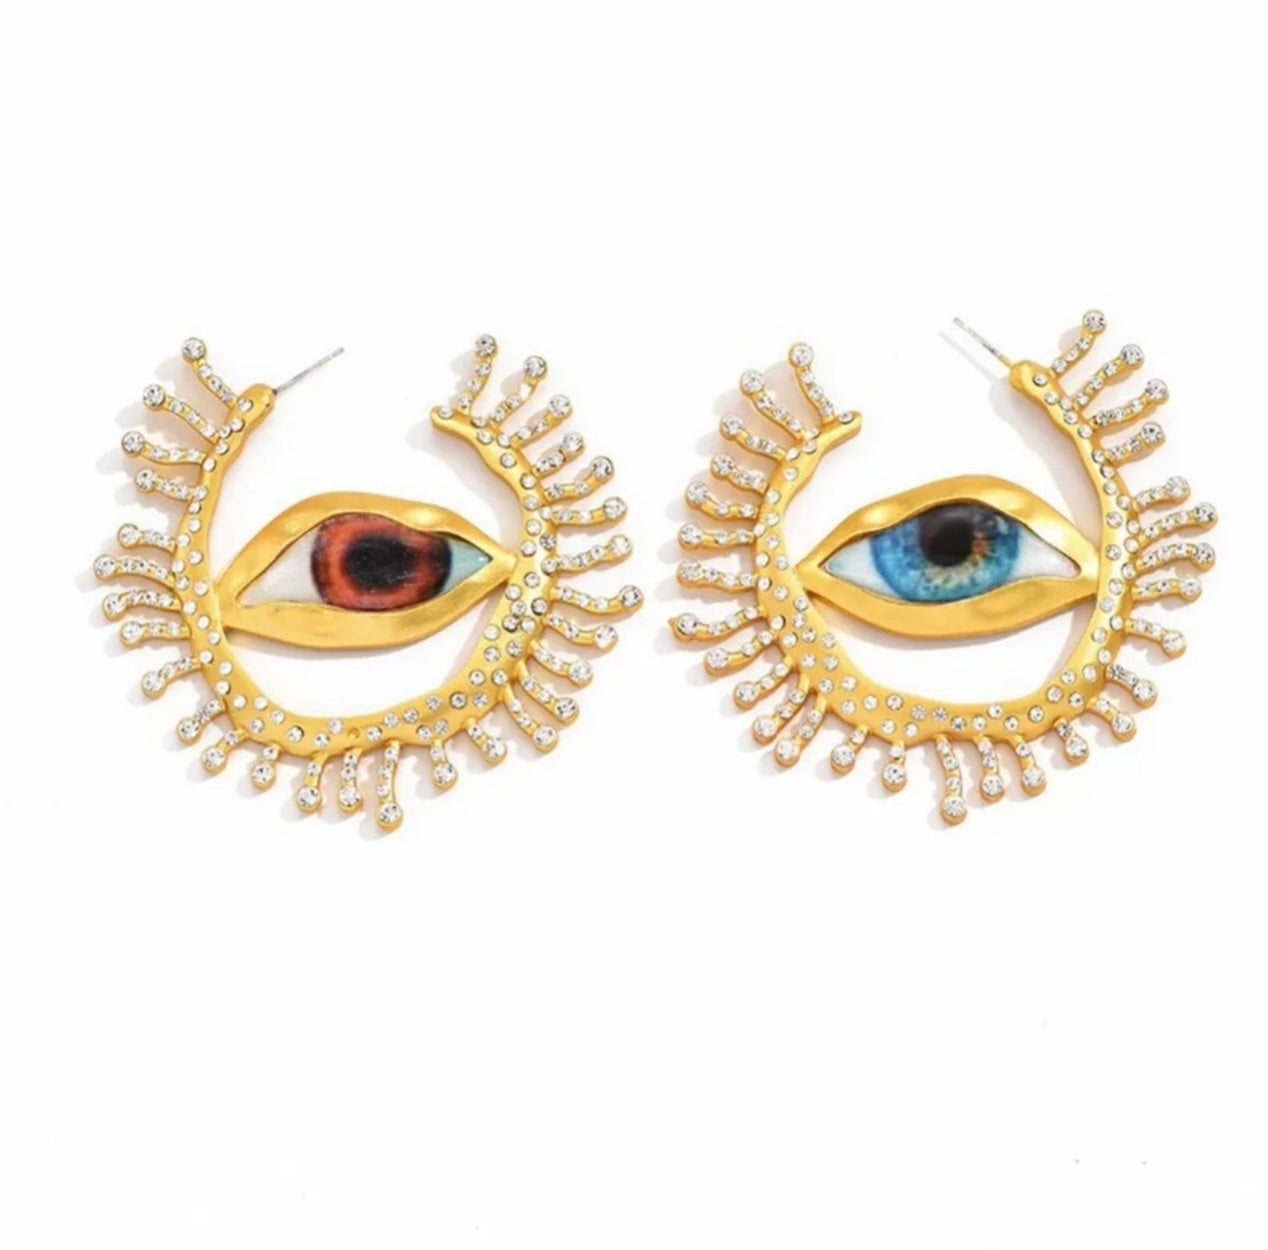 Evil Eye earrings